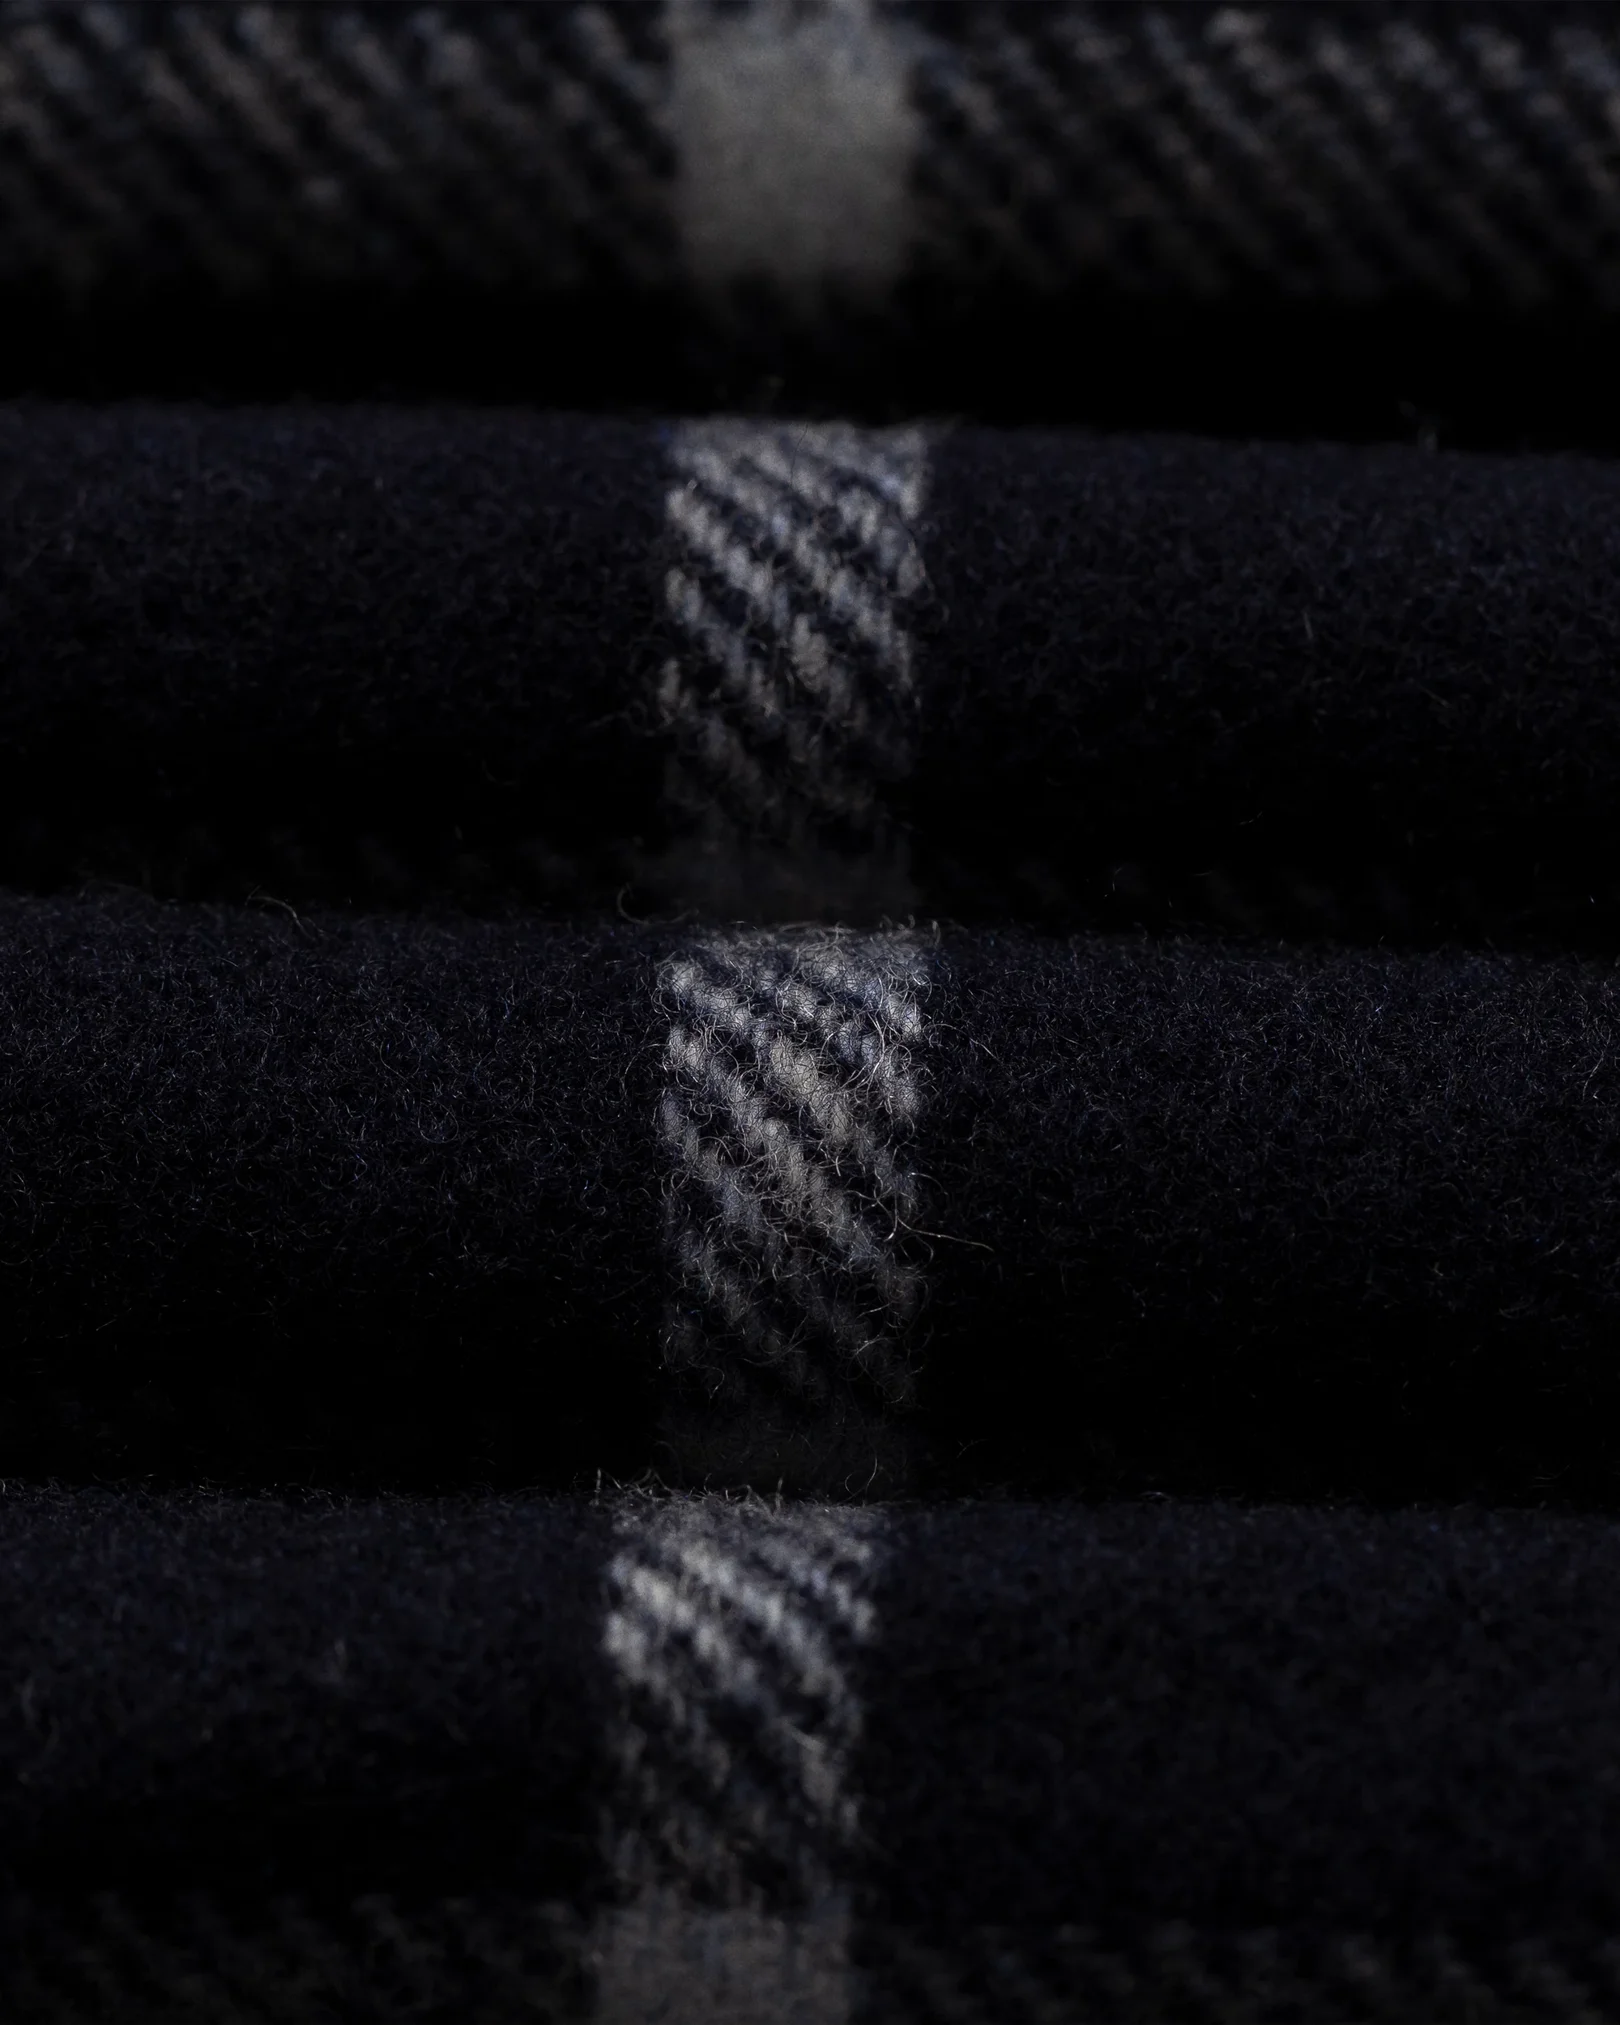 Eton - navy blue checked wool scarf